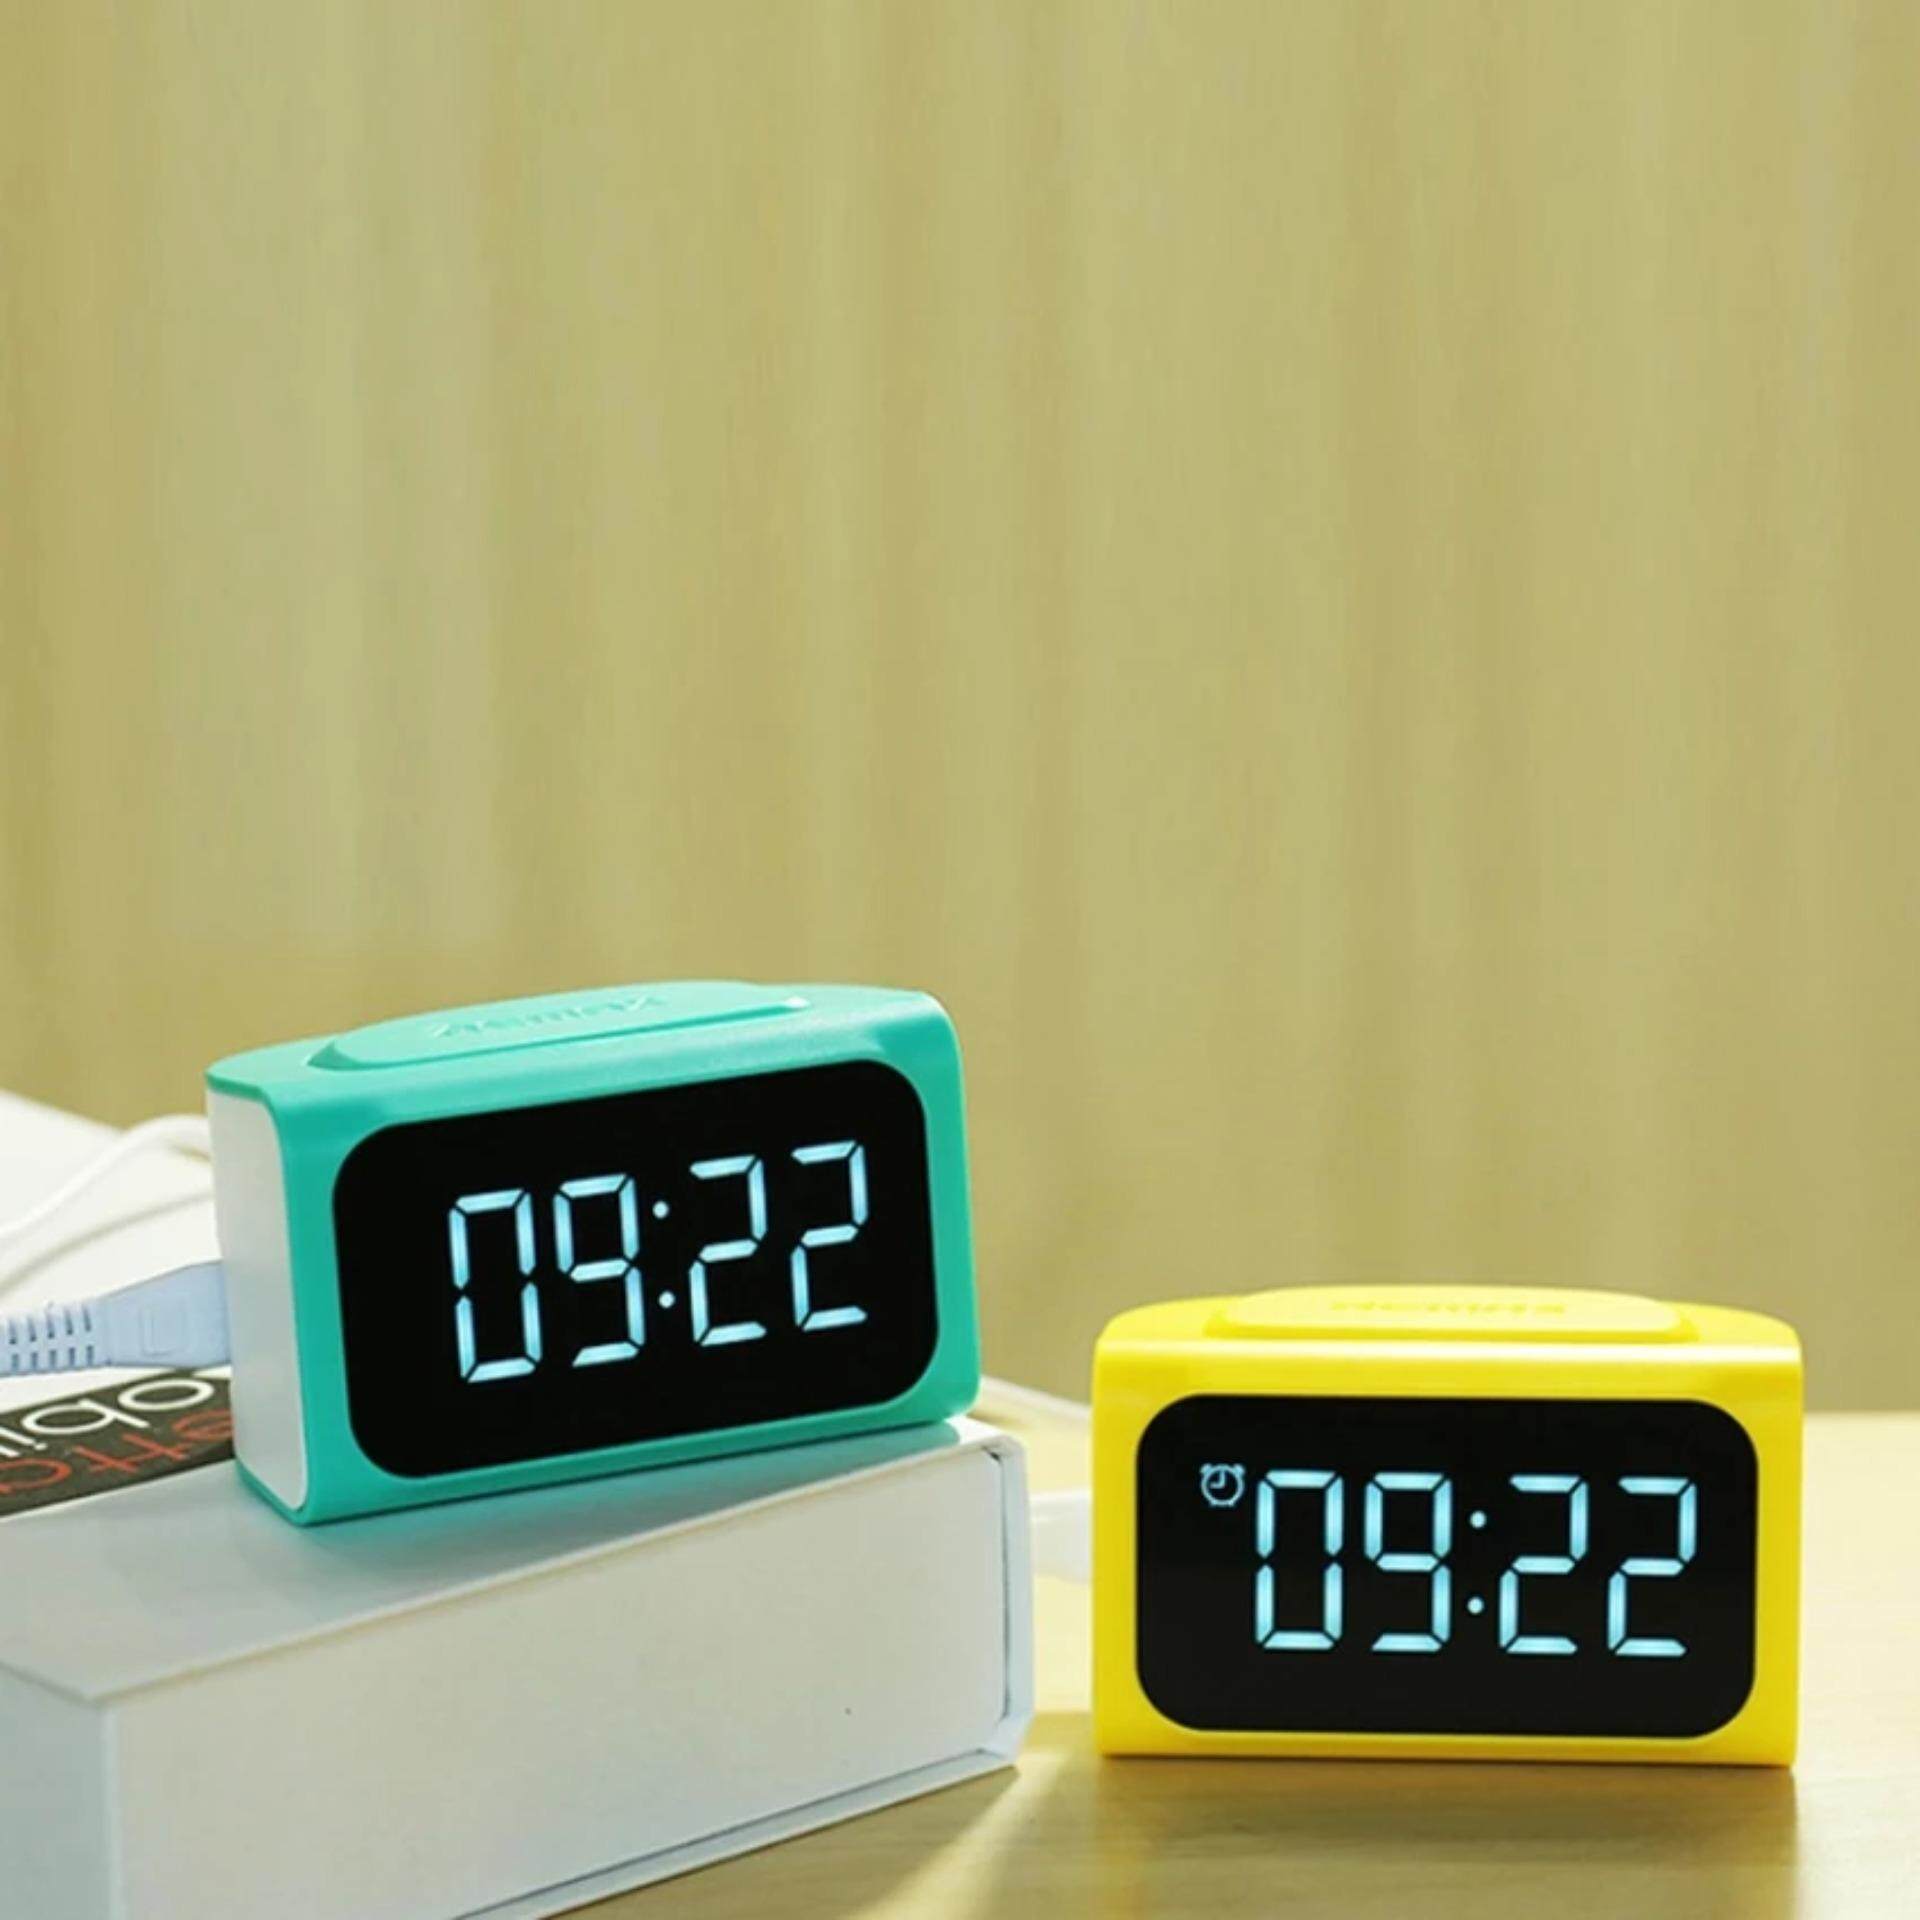 [IX] Remax RM-C05 Zmart Alarm Clock 4xUSB HUB